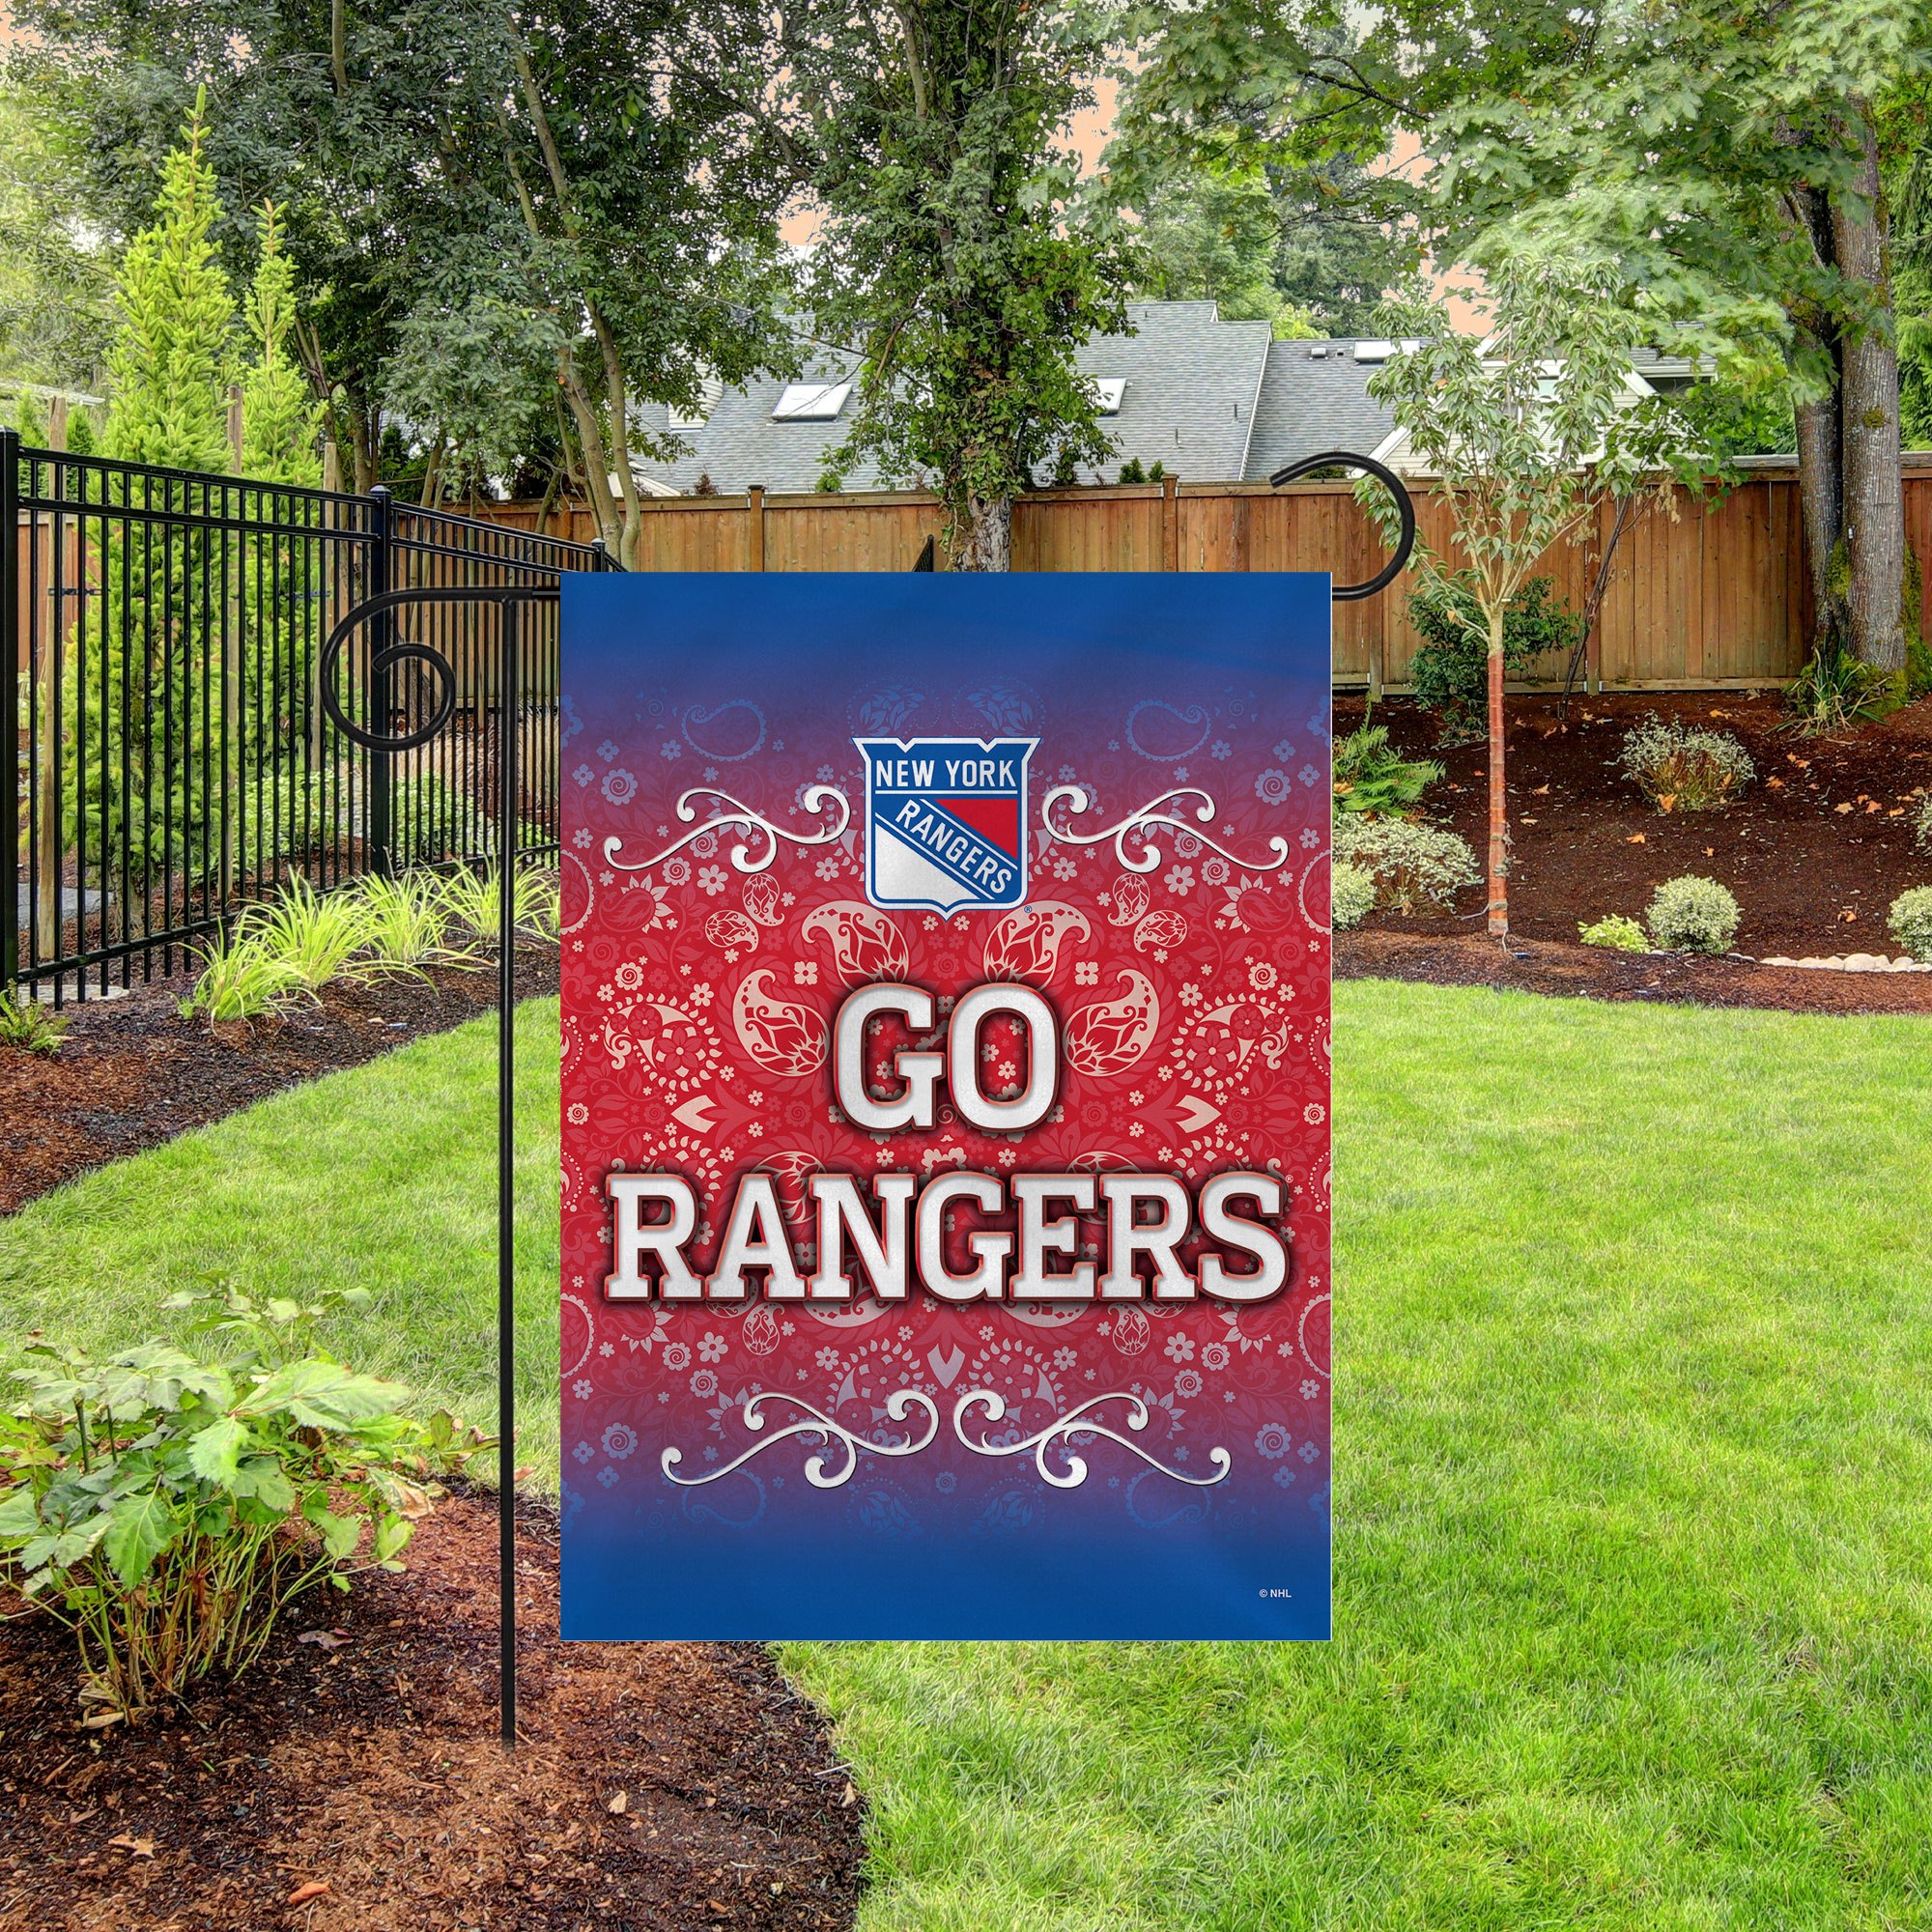 Rico Industries NHL Hockey New York Rangers Go Rangers Double Sided Garden Flag